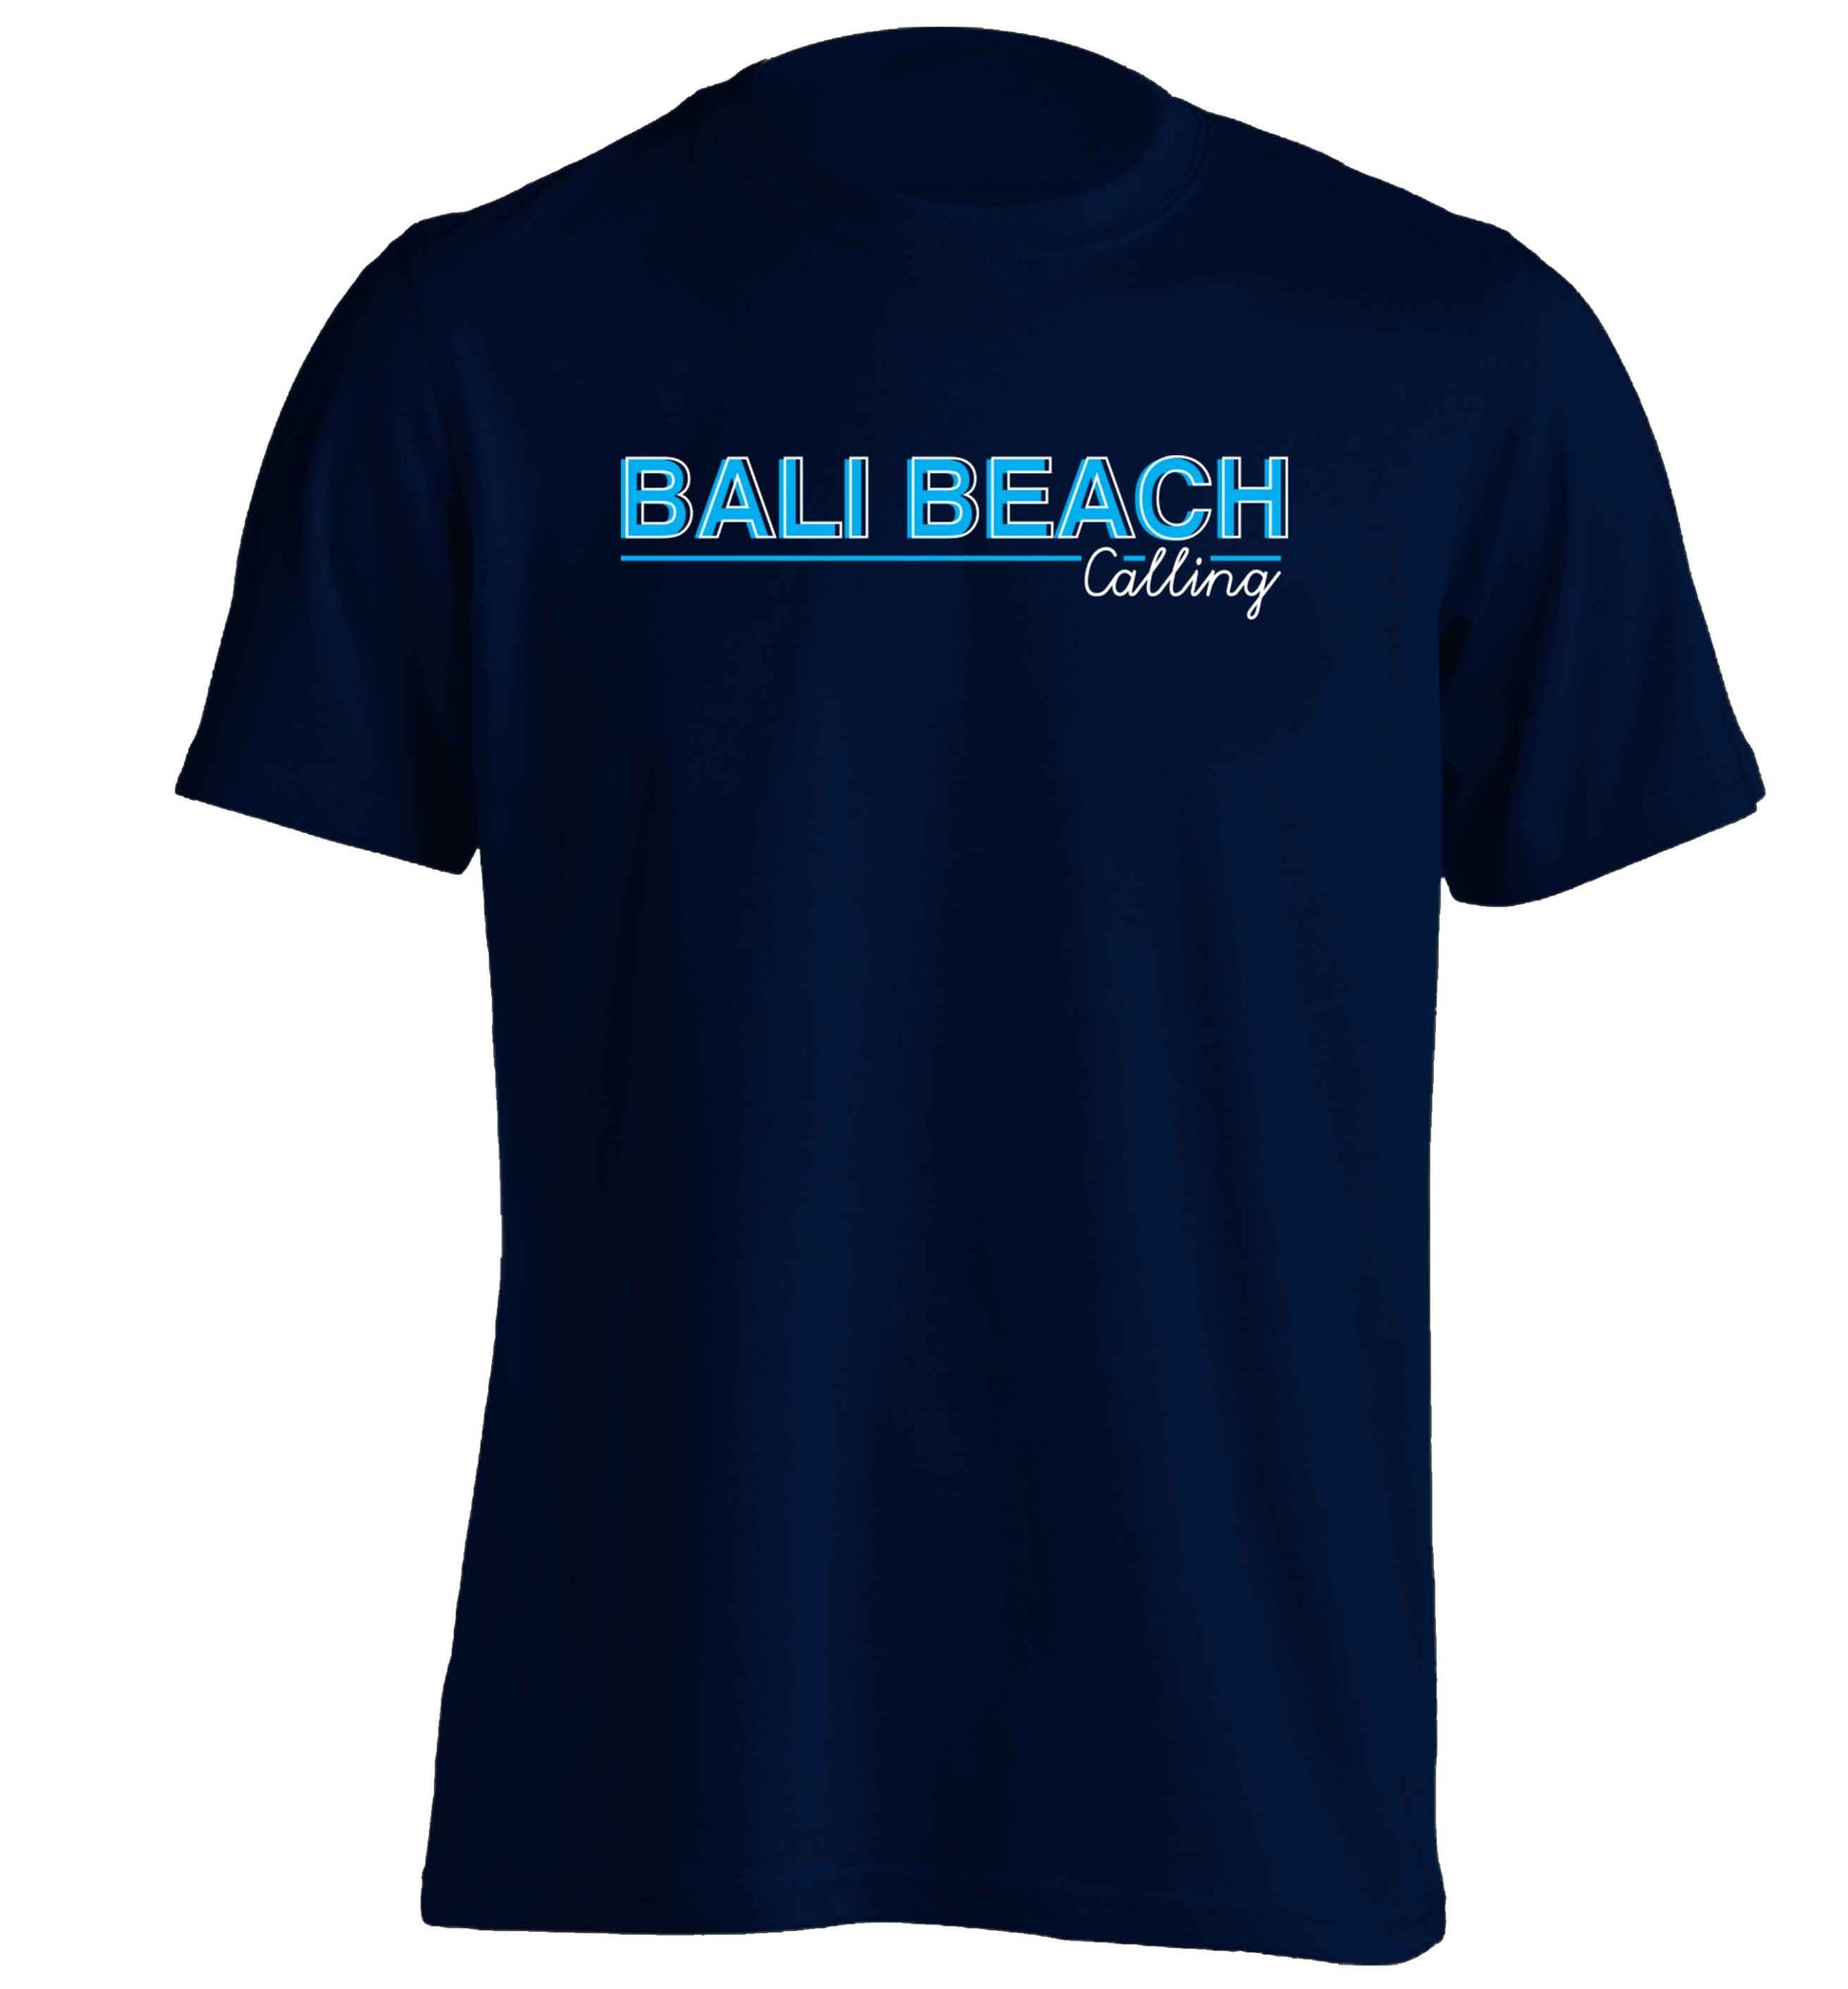 Bali beach calling adults unisex navy Tshirt 2XL